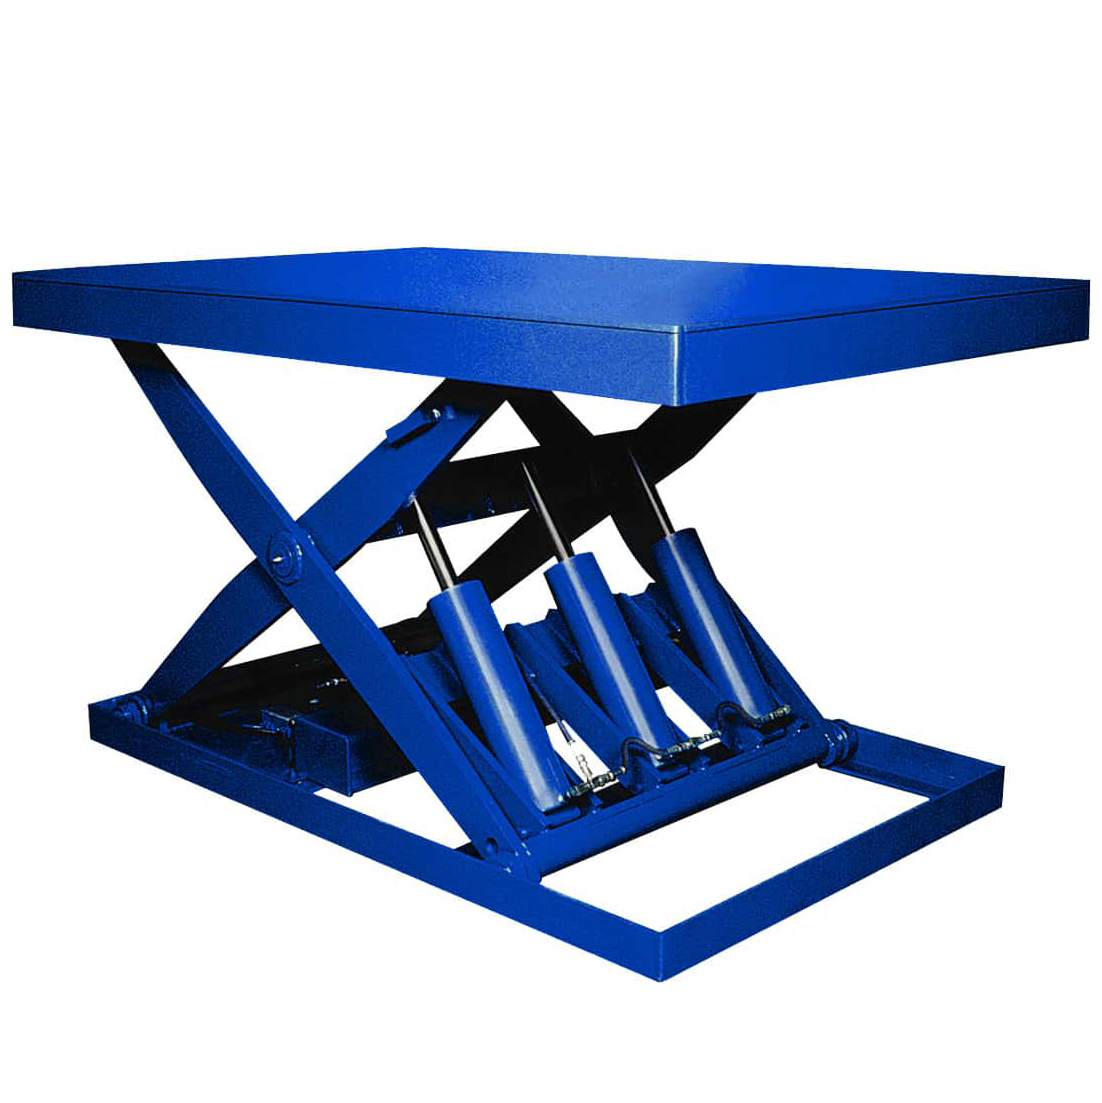 Bultuhang High Quality Scissor Lift Table